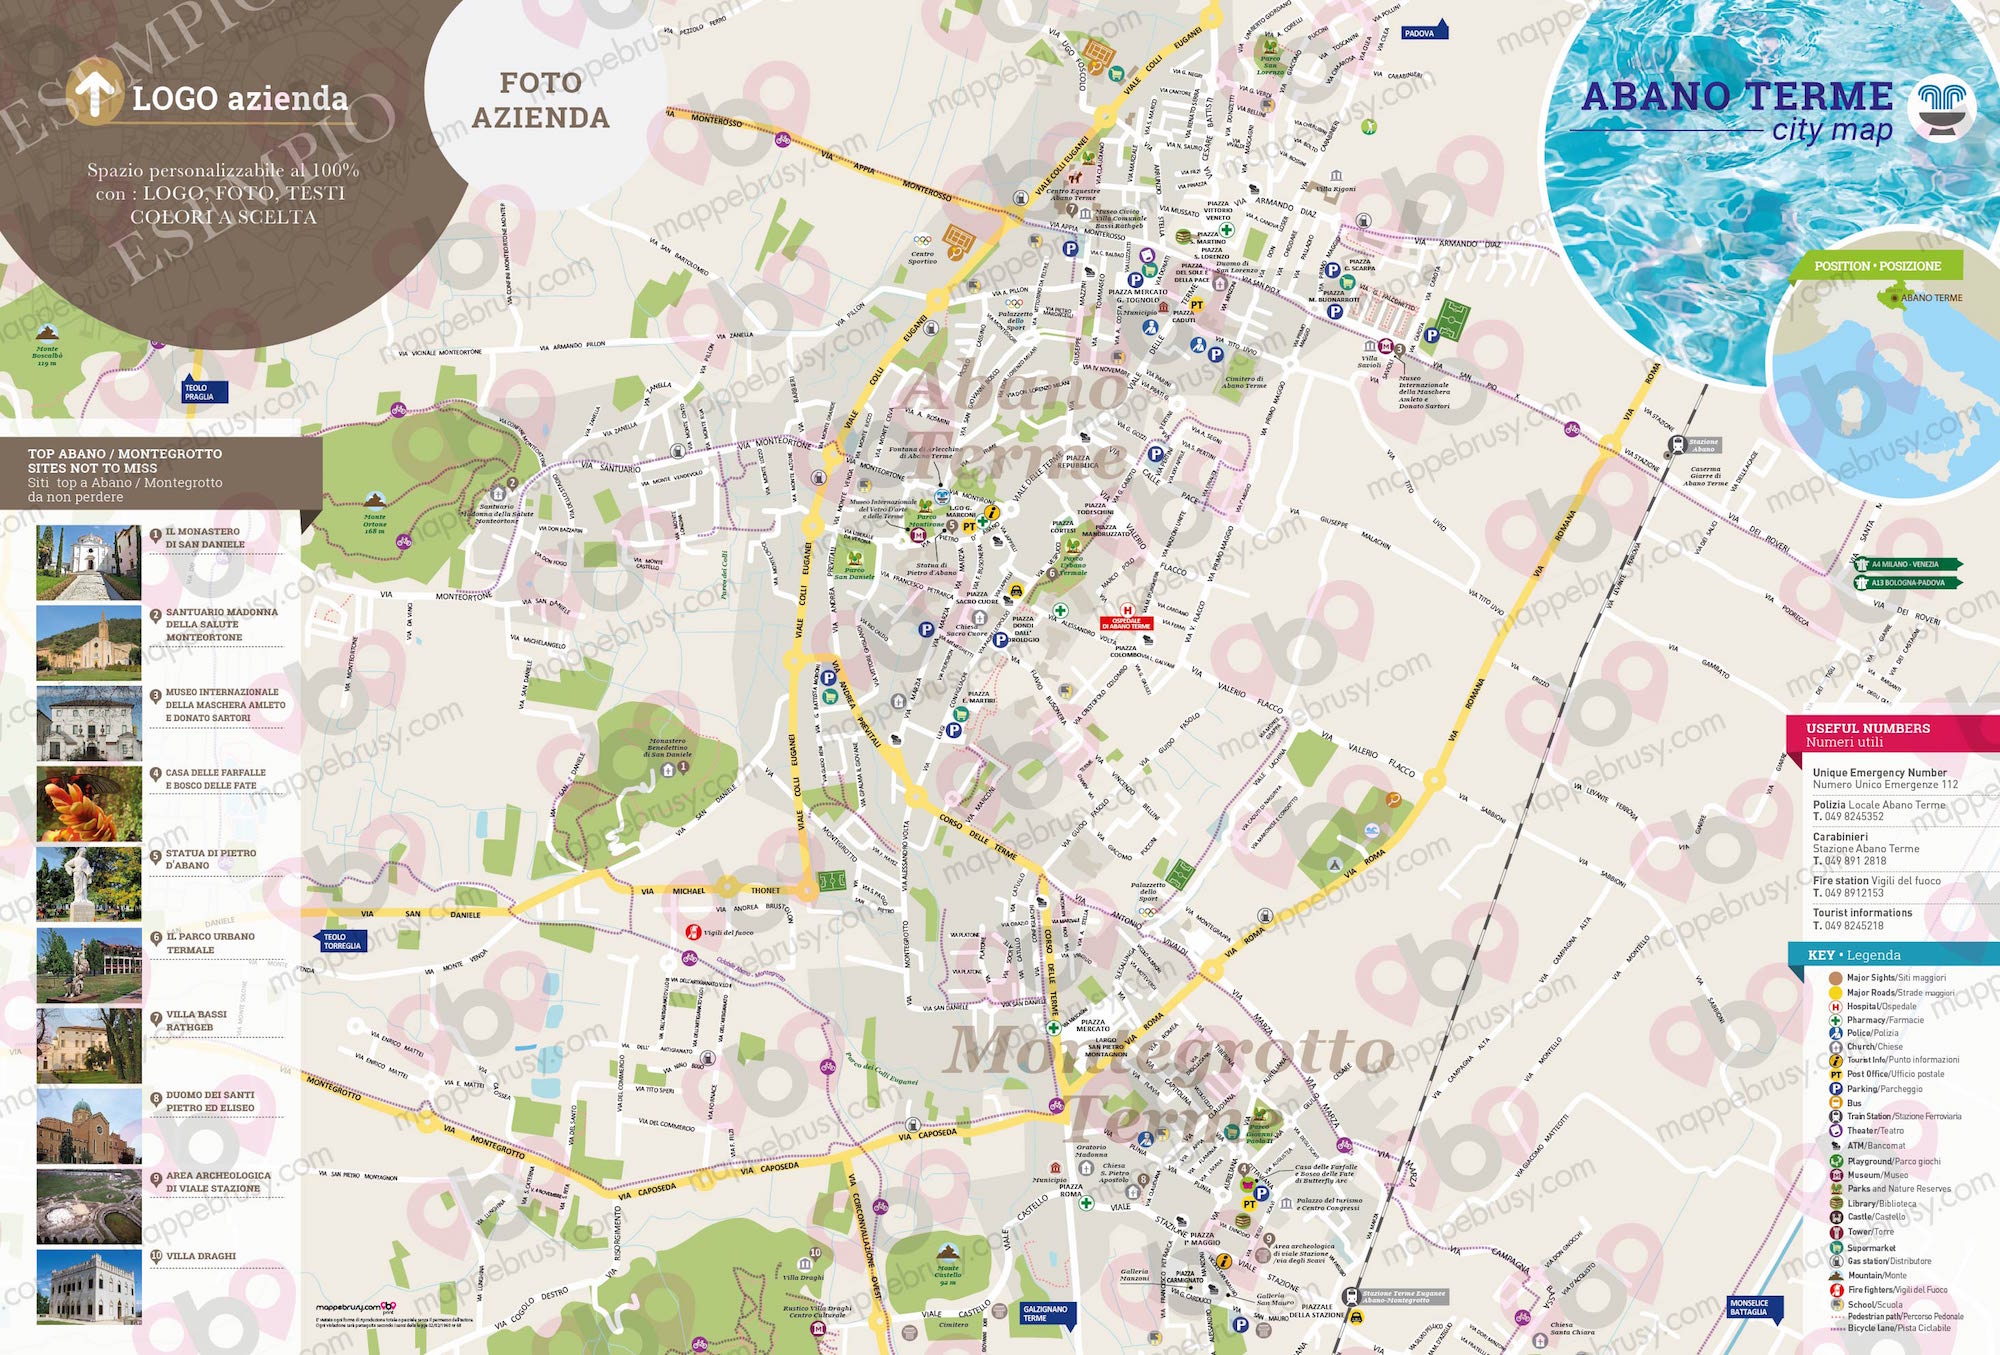 Mappa di Abano e Montegrotto terme - Abano e Montegrotto terme city map - mappa Abano e Montegrotto terme - mappa personalizzata di Abano e Montegrotto terme - mappa tursitica di Abano e Montegrotto terme